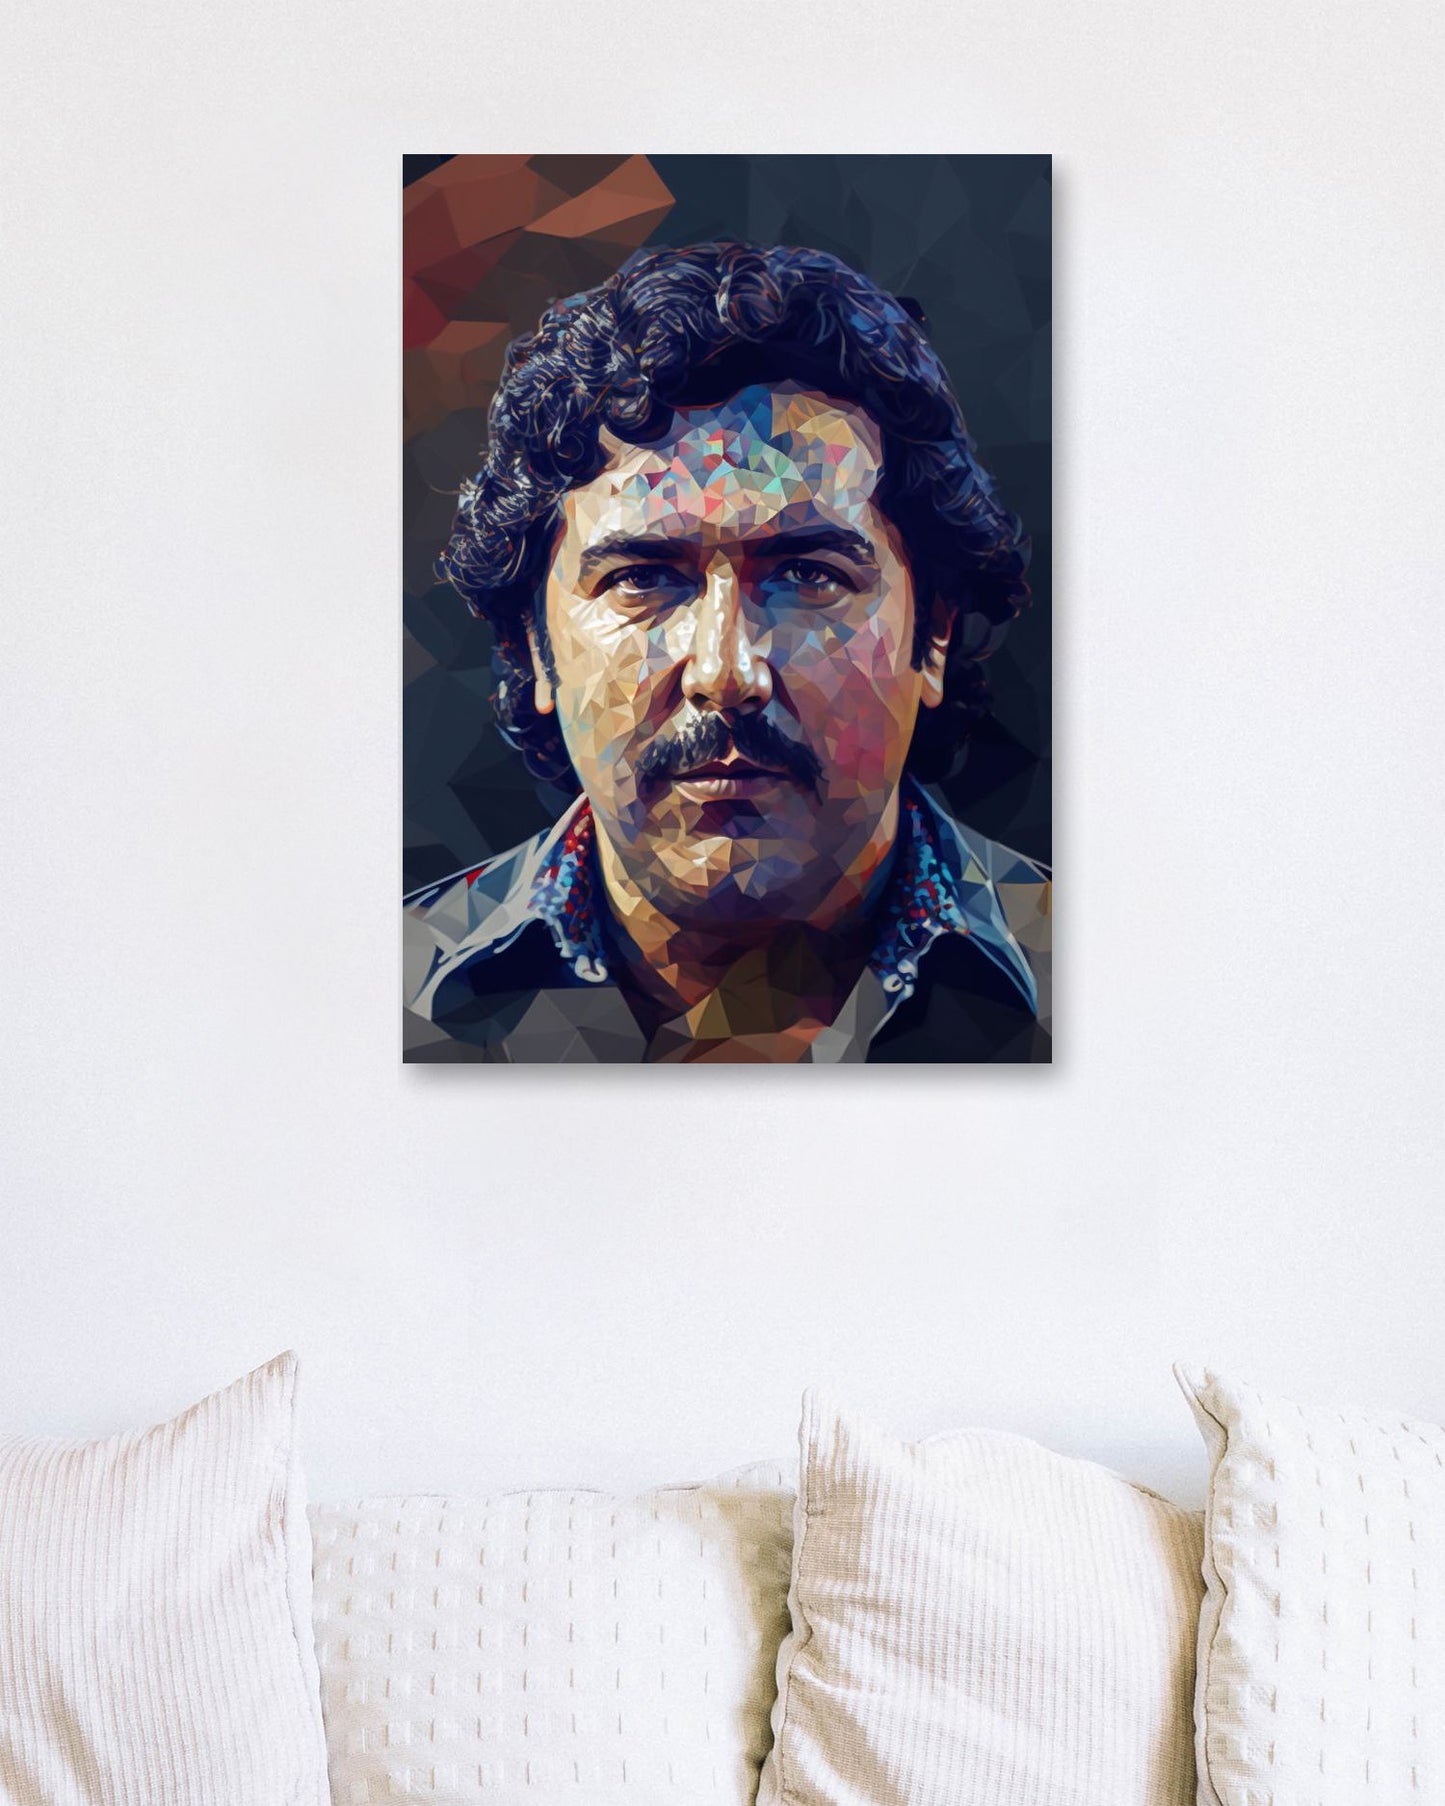 Pablo Escobar Low Poly - @WpapArtist